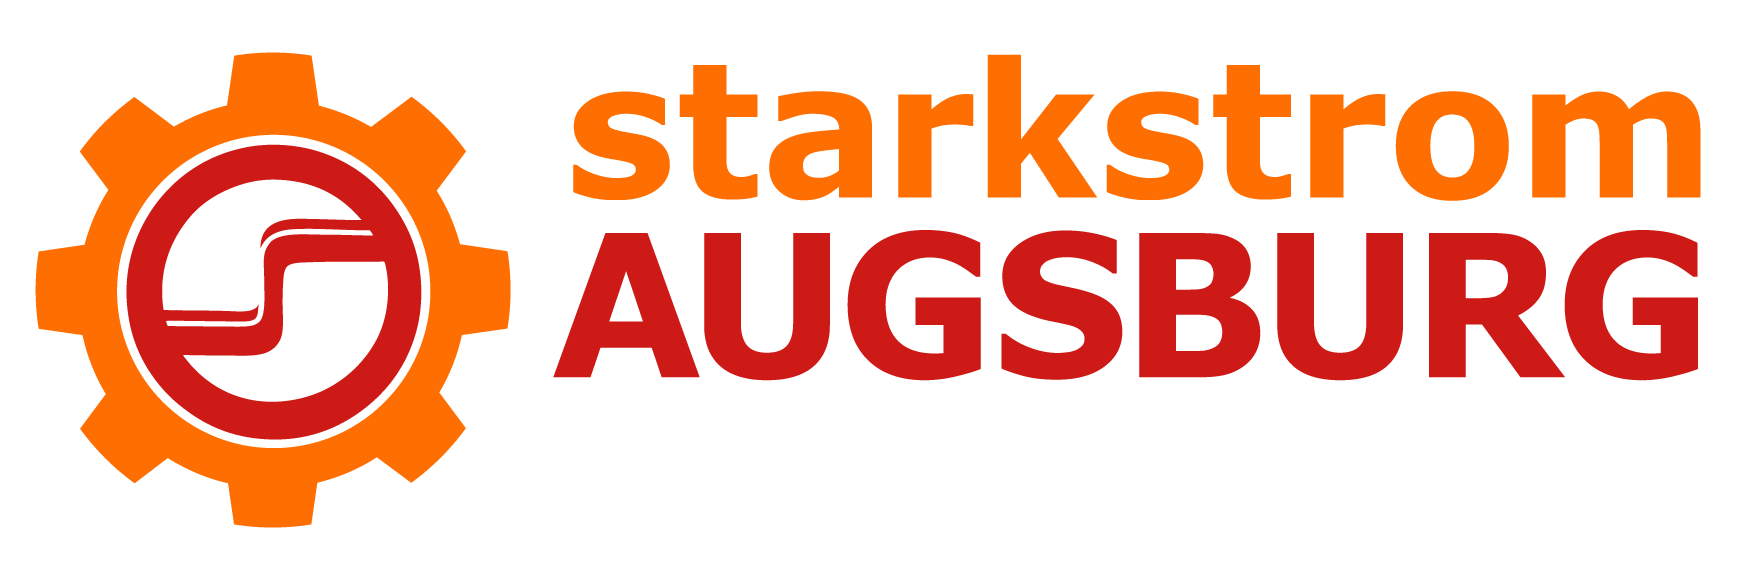 Starkstrom Logo